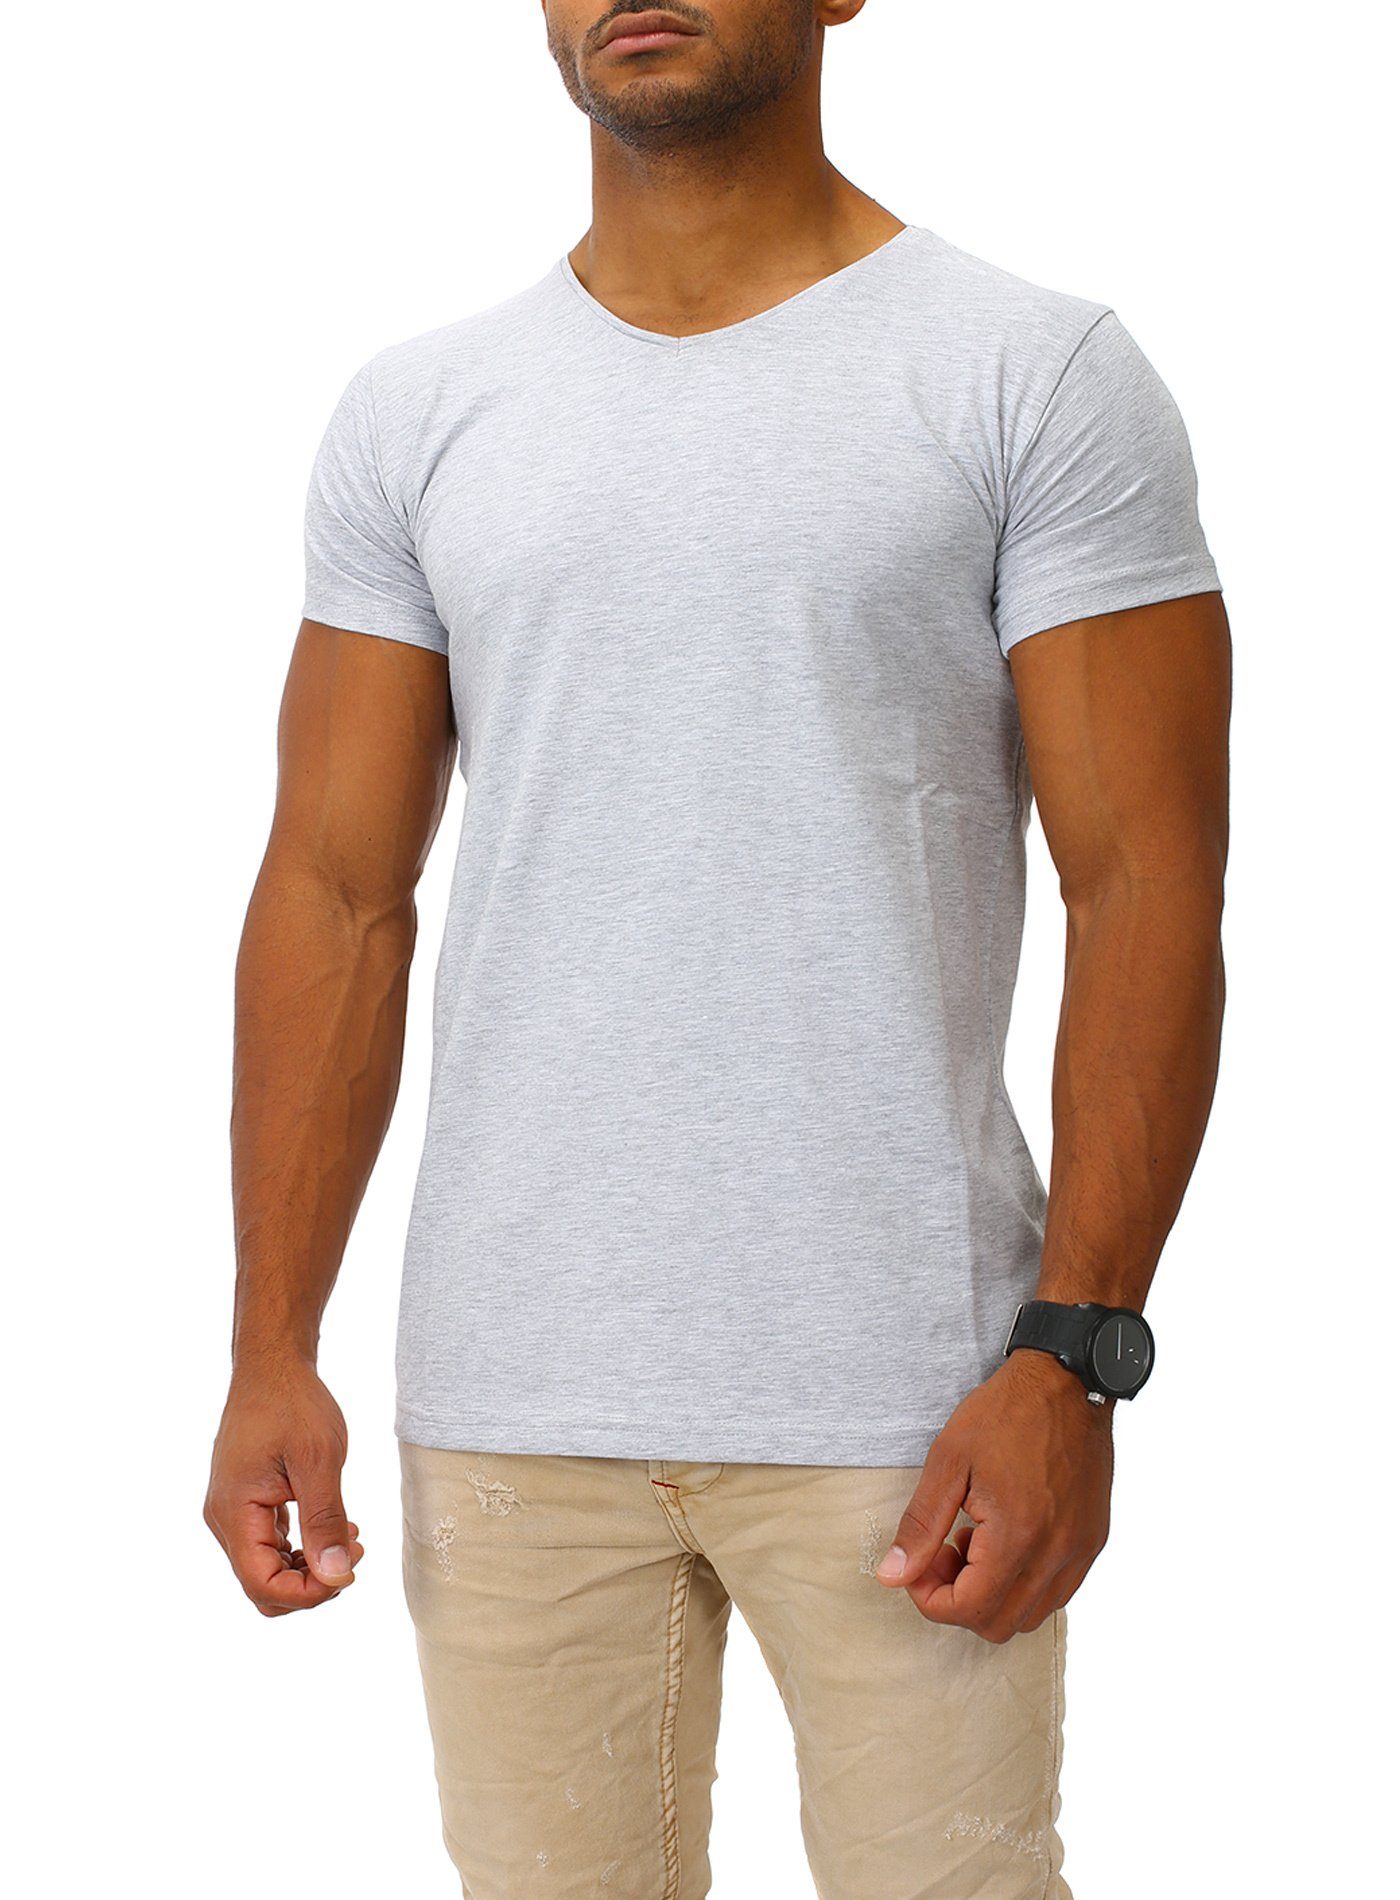 Joe Franks T-Shirt HIGH mit hohem V-Ausschnitt grey melange